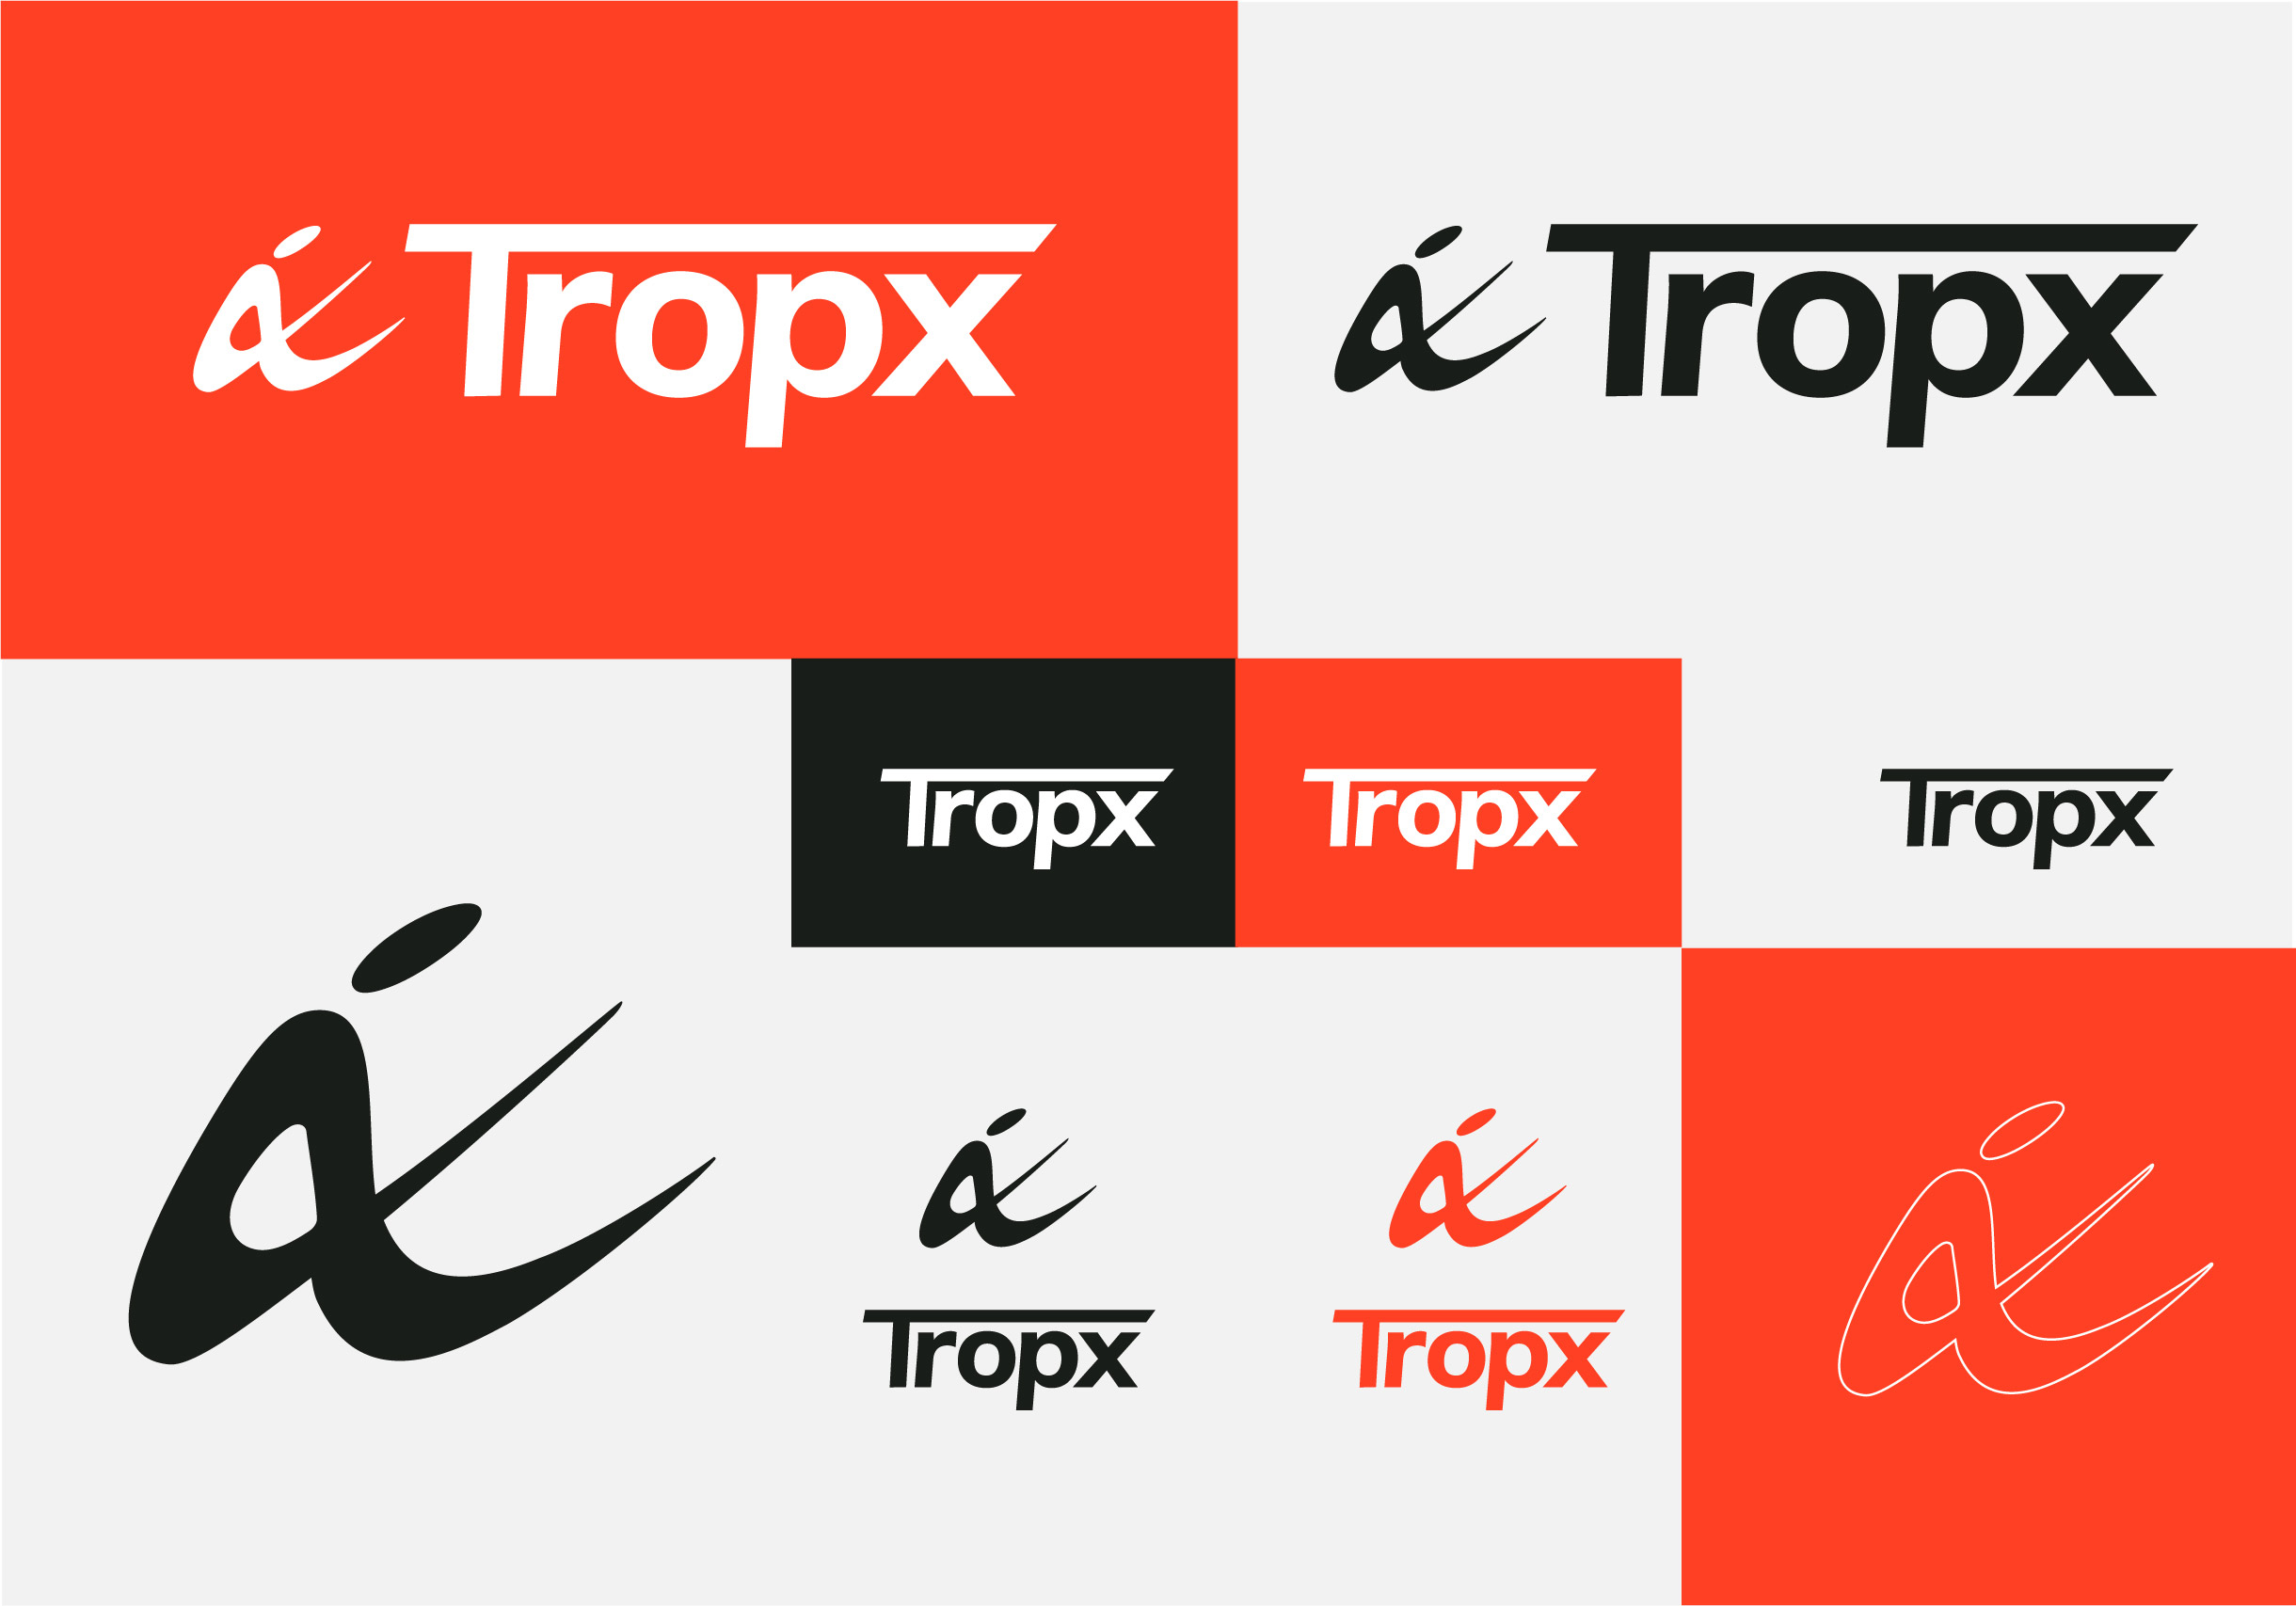 NotFromHere Brand Agency logo design Tropx logo guideline design for fitness